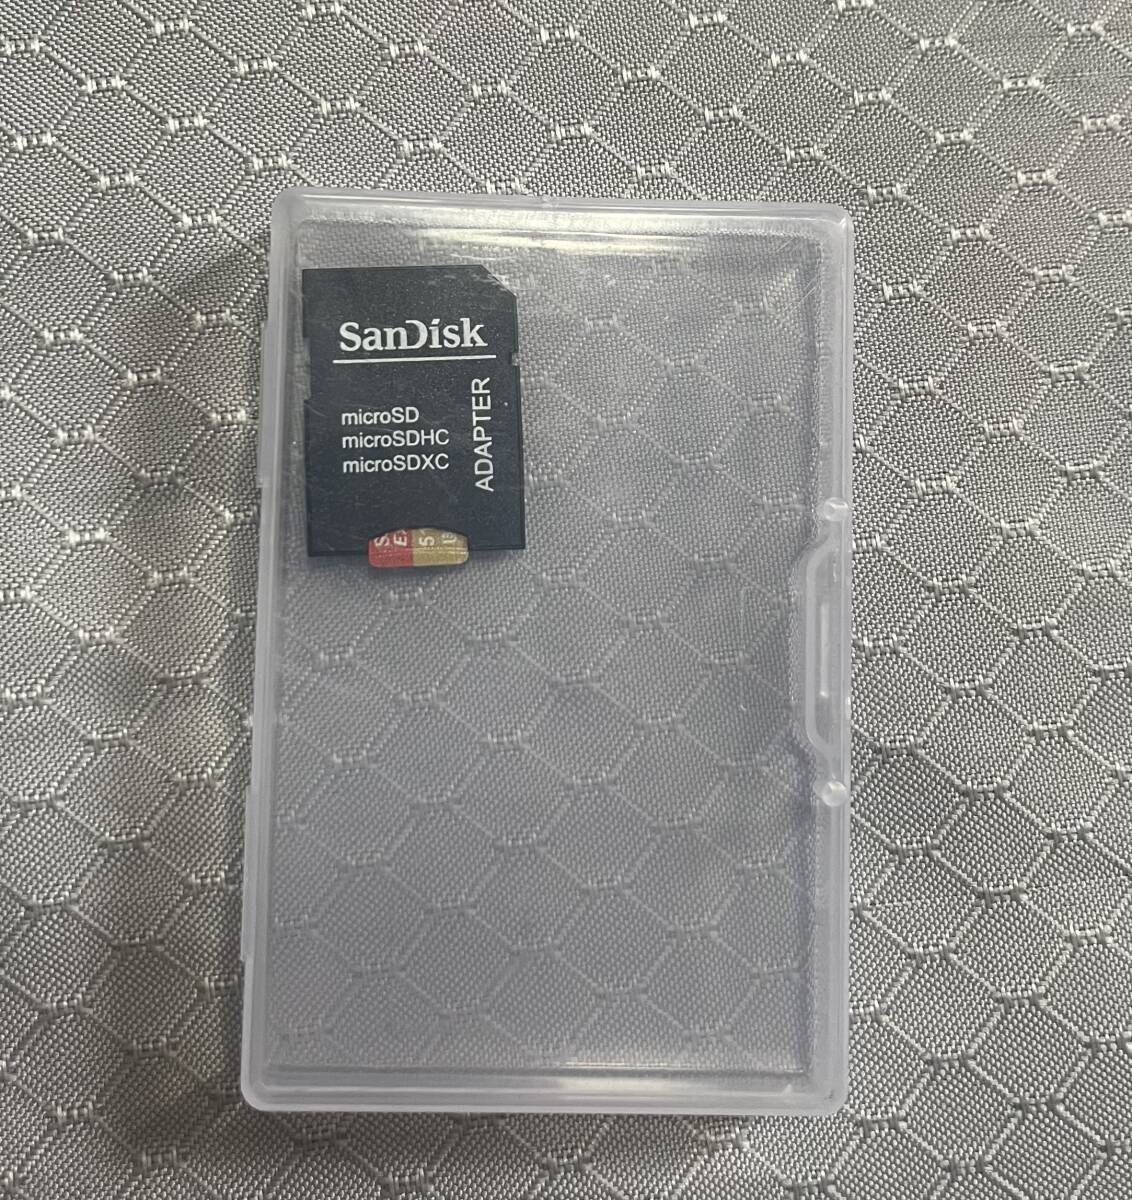 SanDisk サンディスク Extreme 512GB microSDXC. microS DHC microSD _画像3